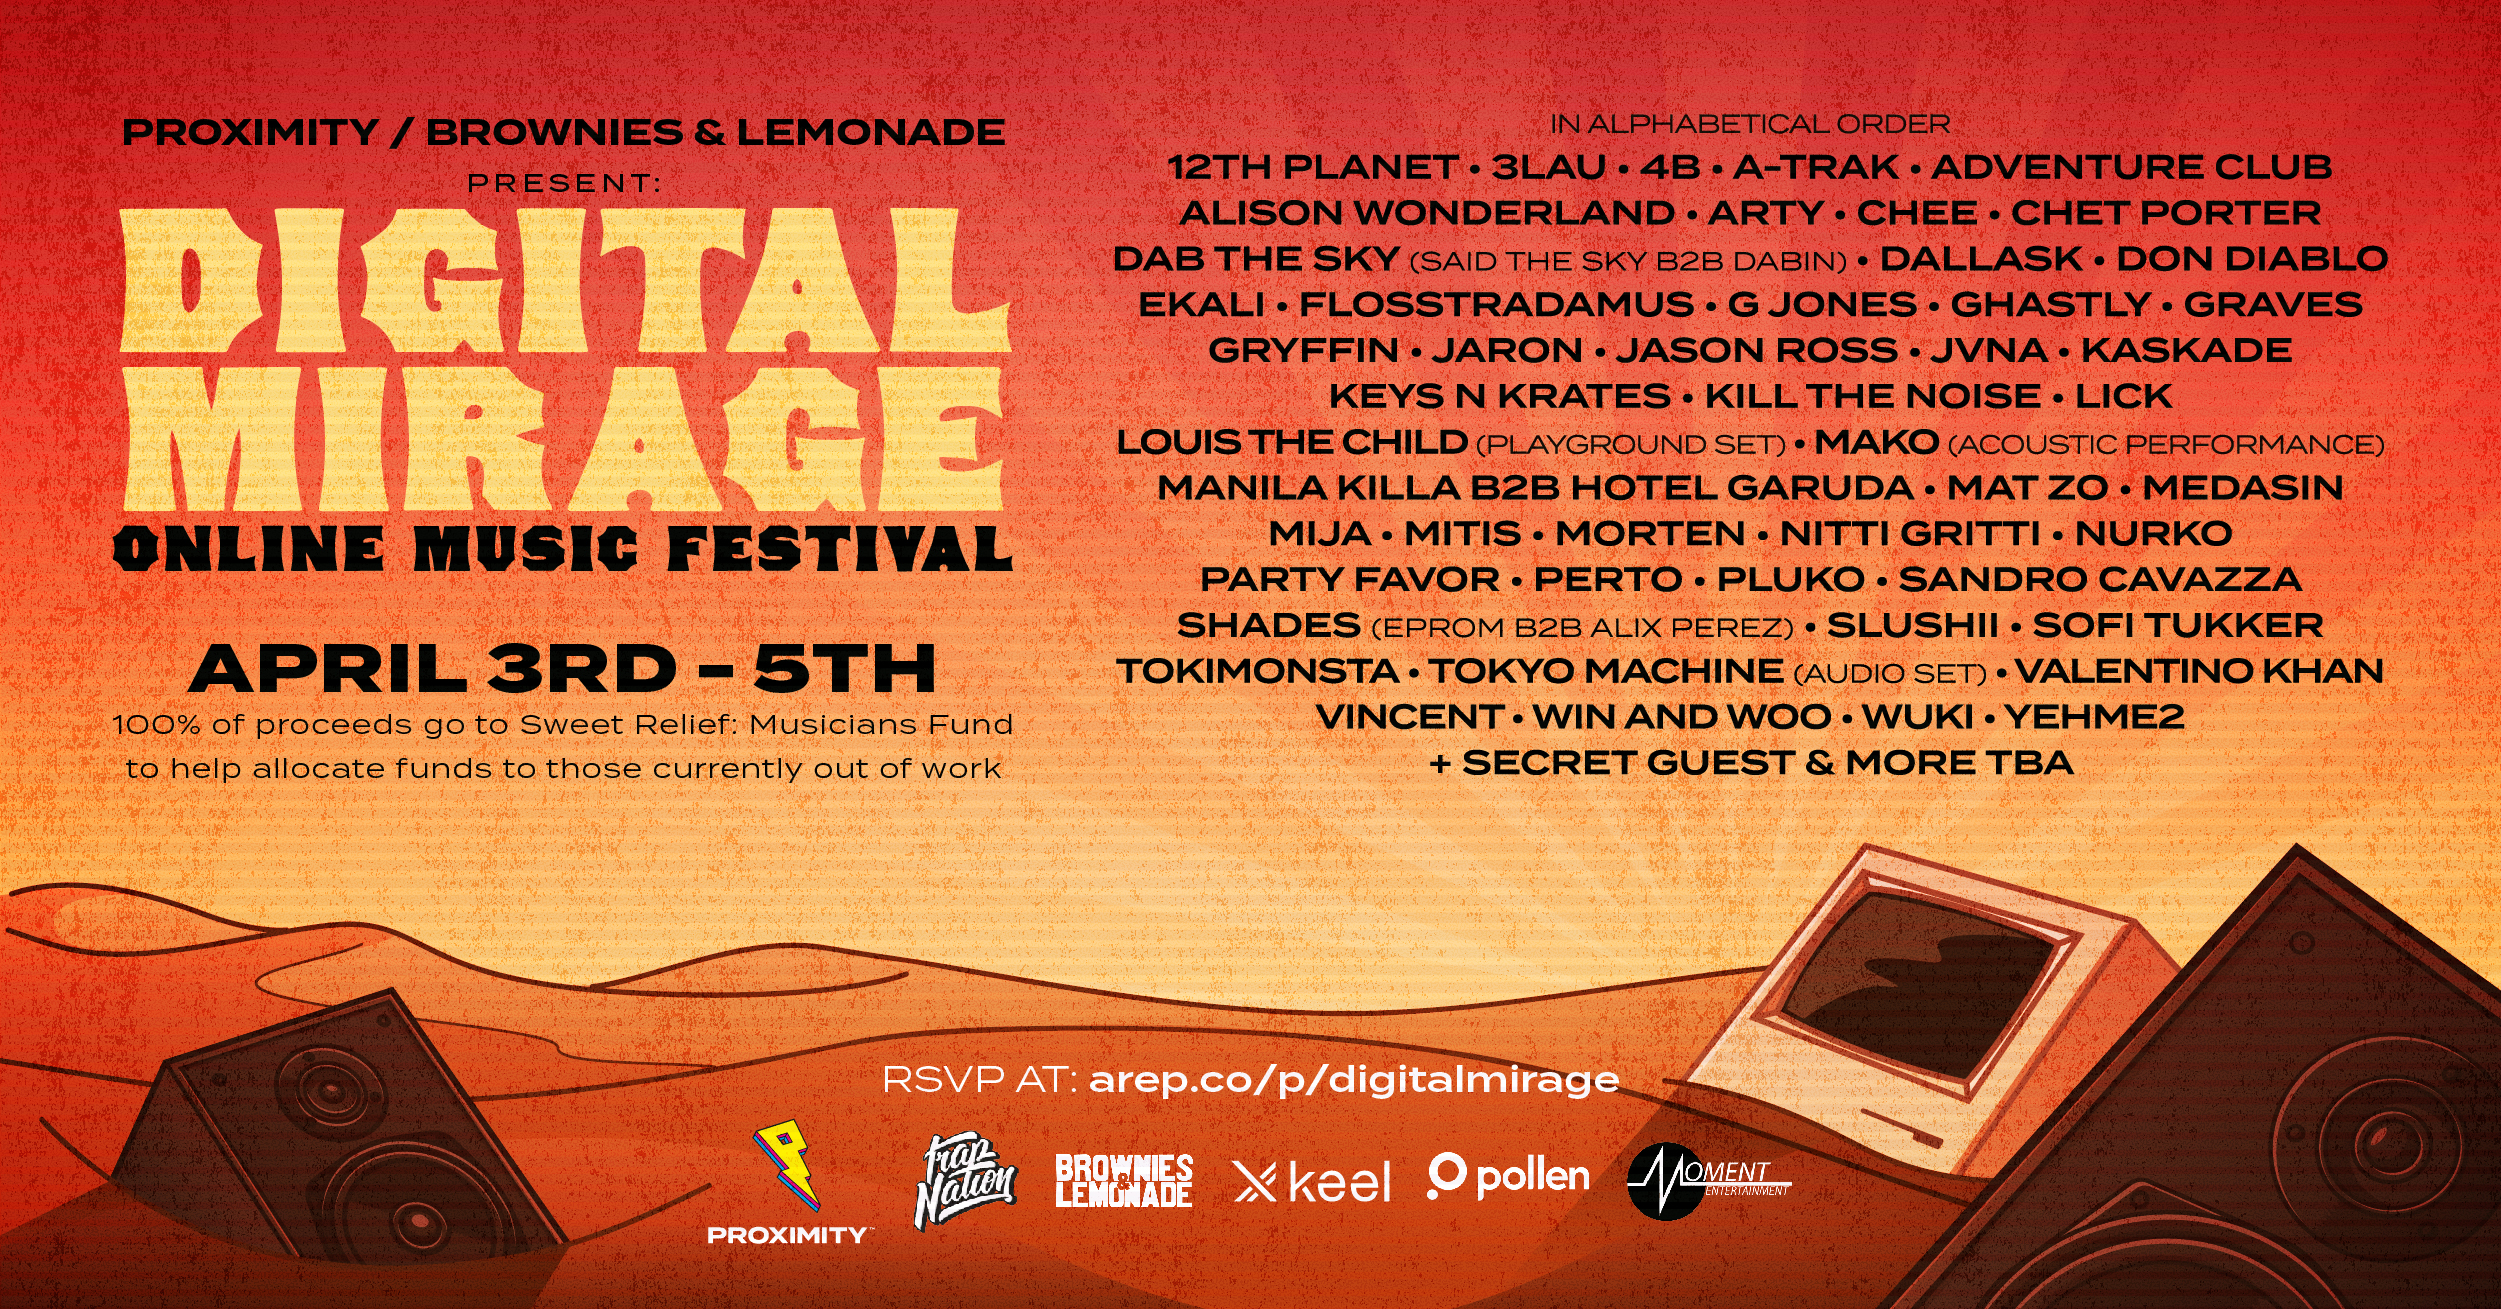 Proximity and Brownies & Lemonade Announce Digital Mirage Online Music Festival